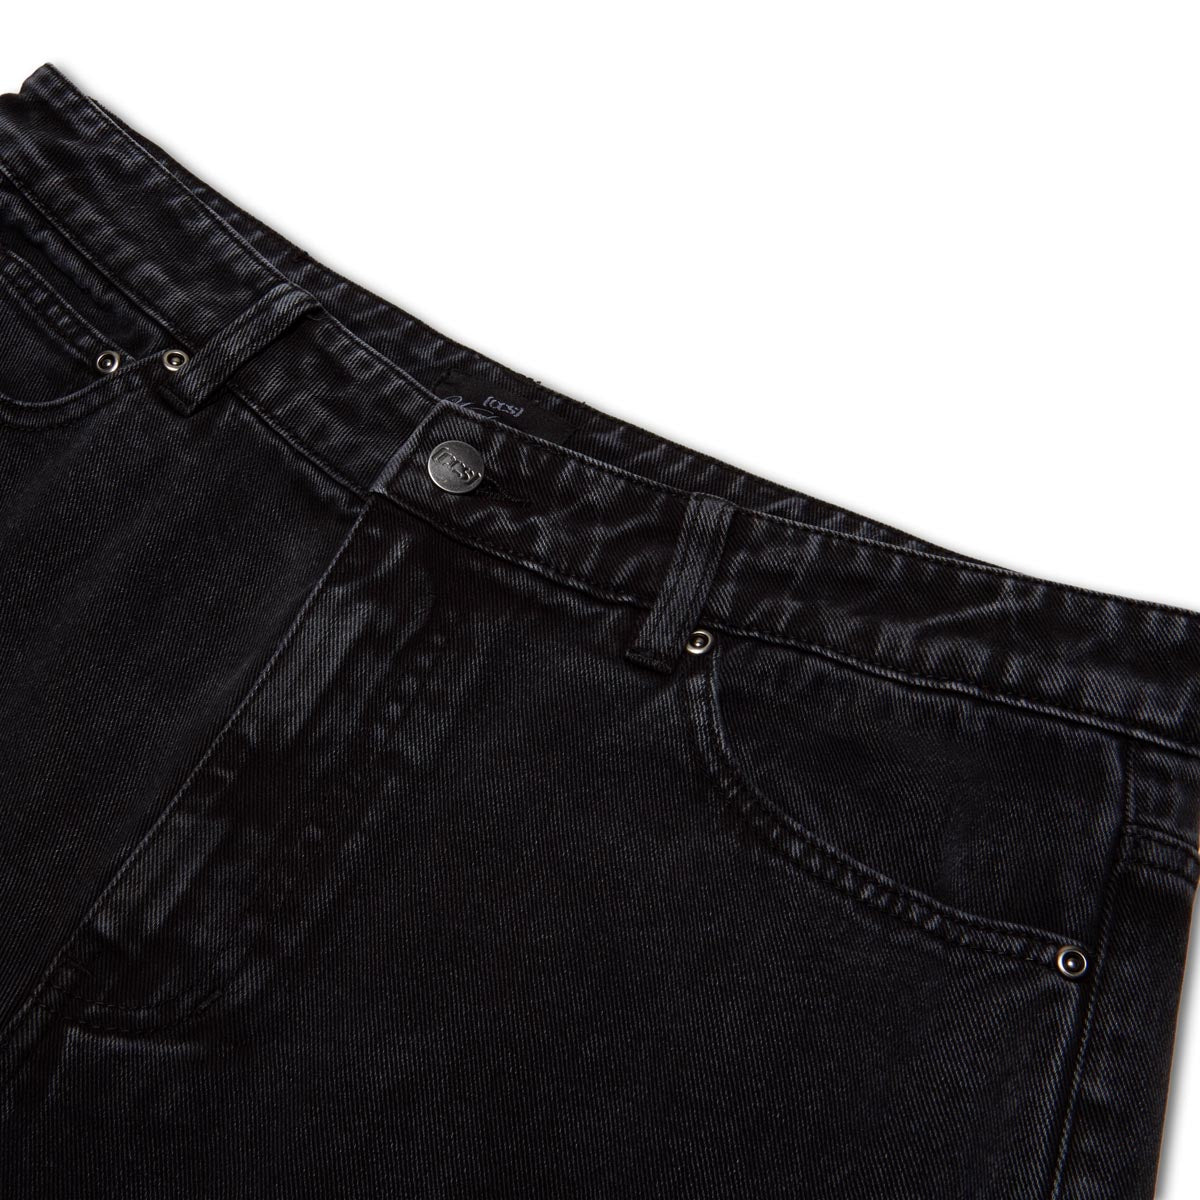 CCS Double Knee Original Relaxed Denim Jeans - Acid Black image 5